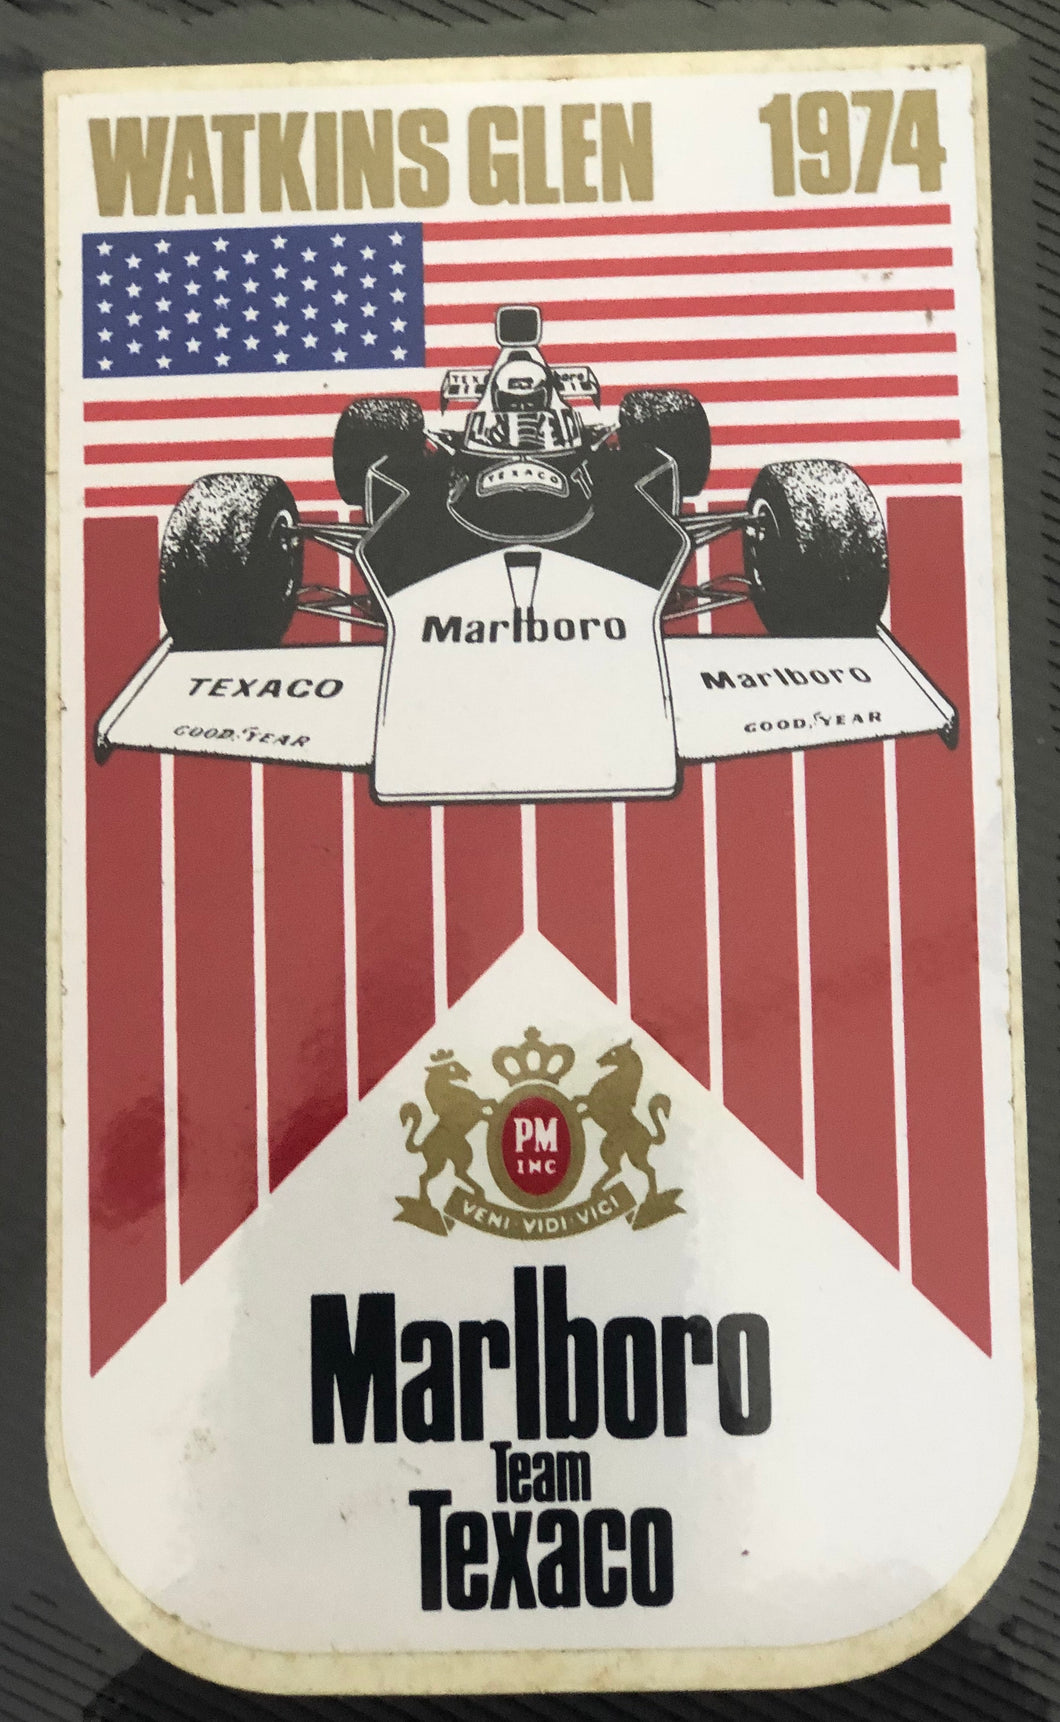 Marlboro team Texaco - United States 1974